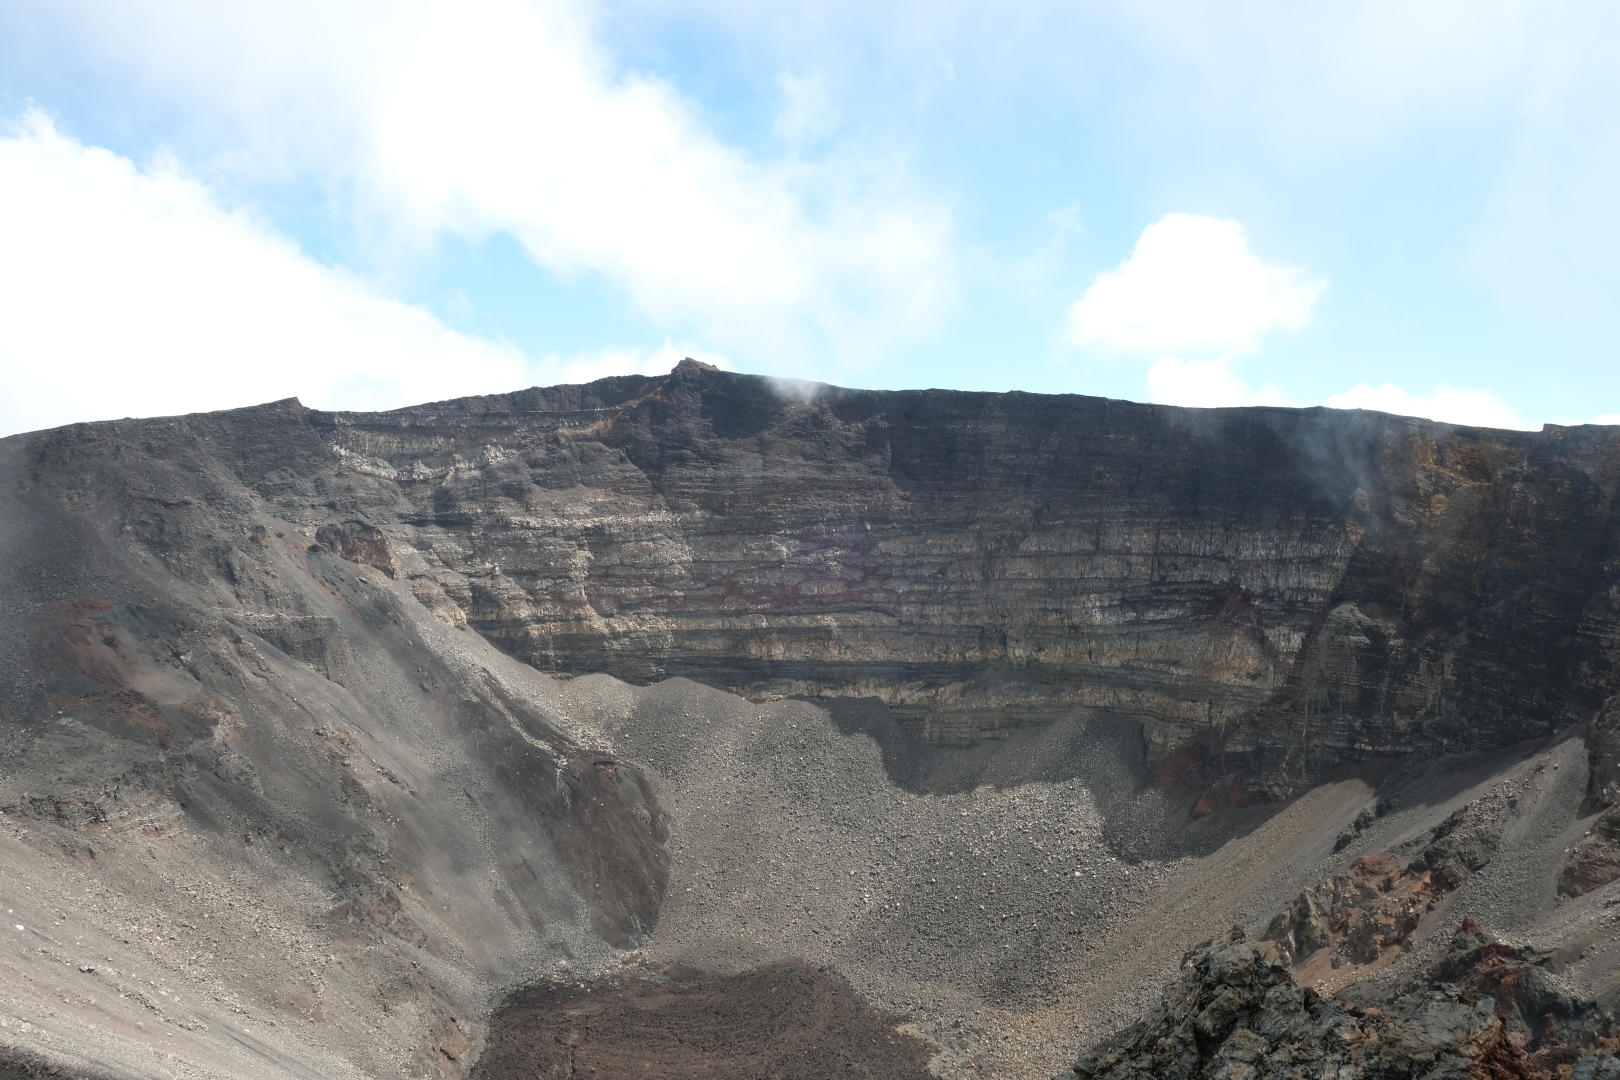 Gipfelfoto am Rand des Cratere Dolomieu. Von links: Vincent, Ute, Dirk. Blick in den Krater.